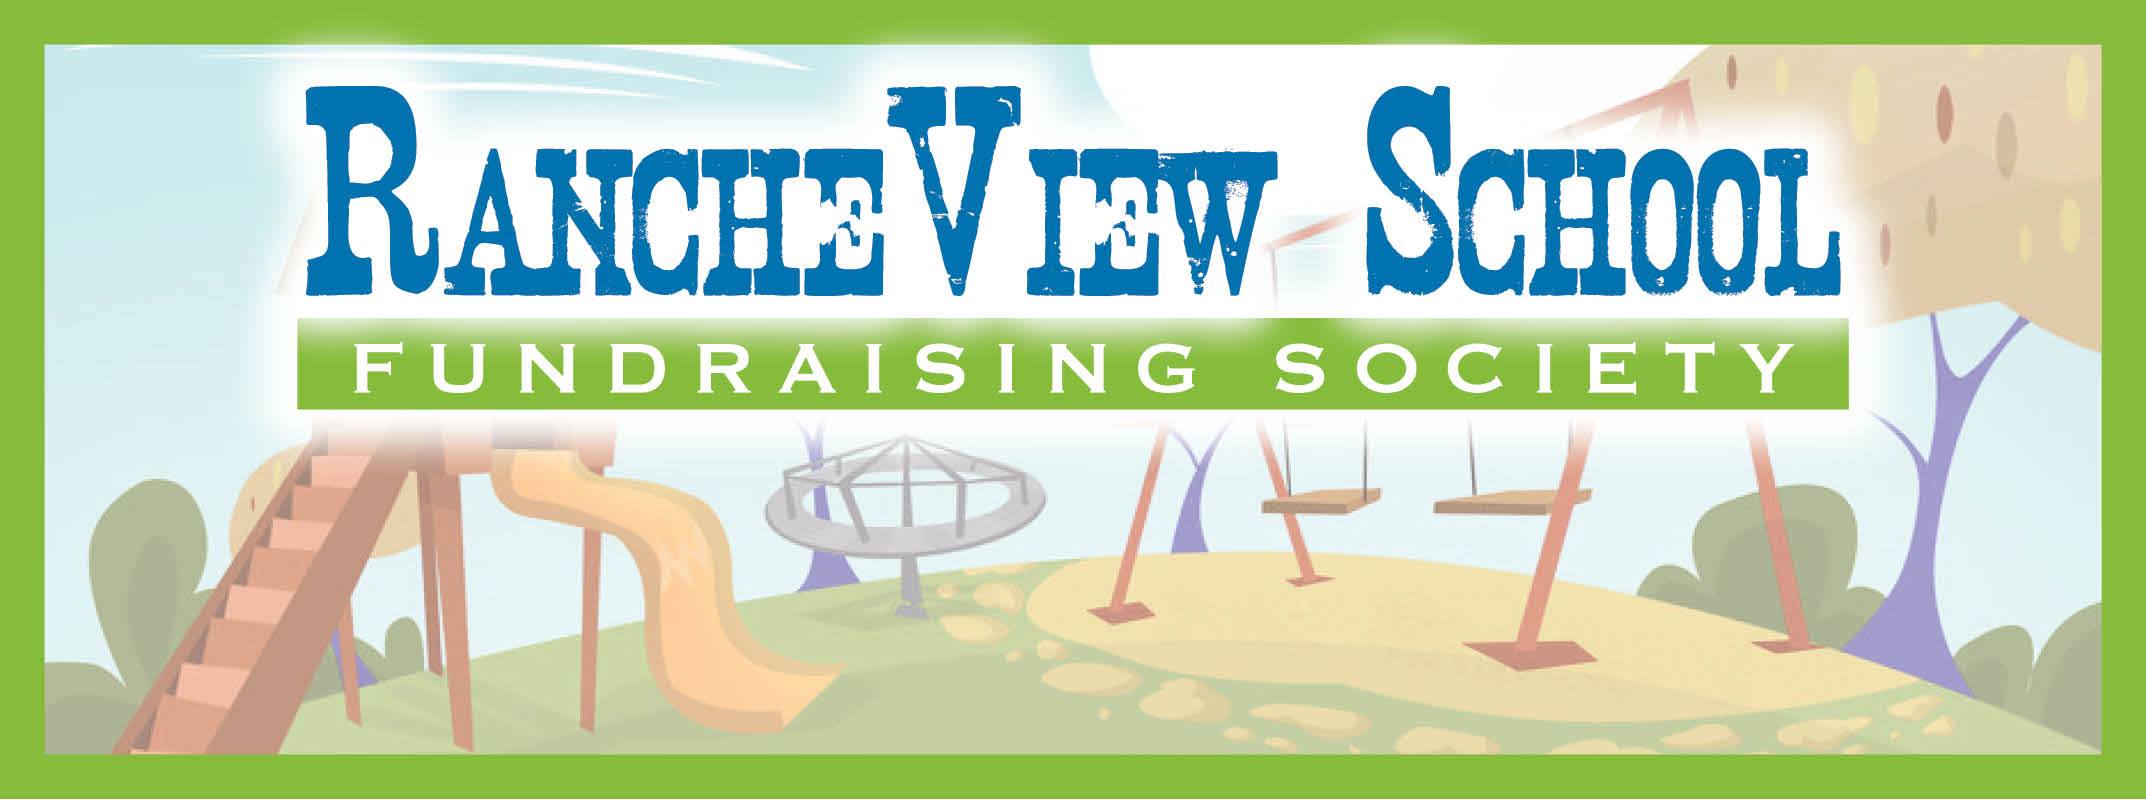 RancheView School Fundraising Society